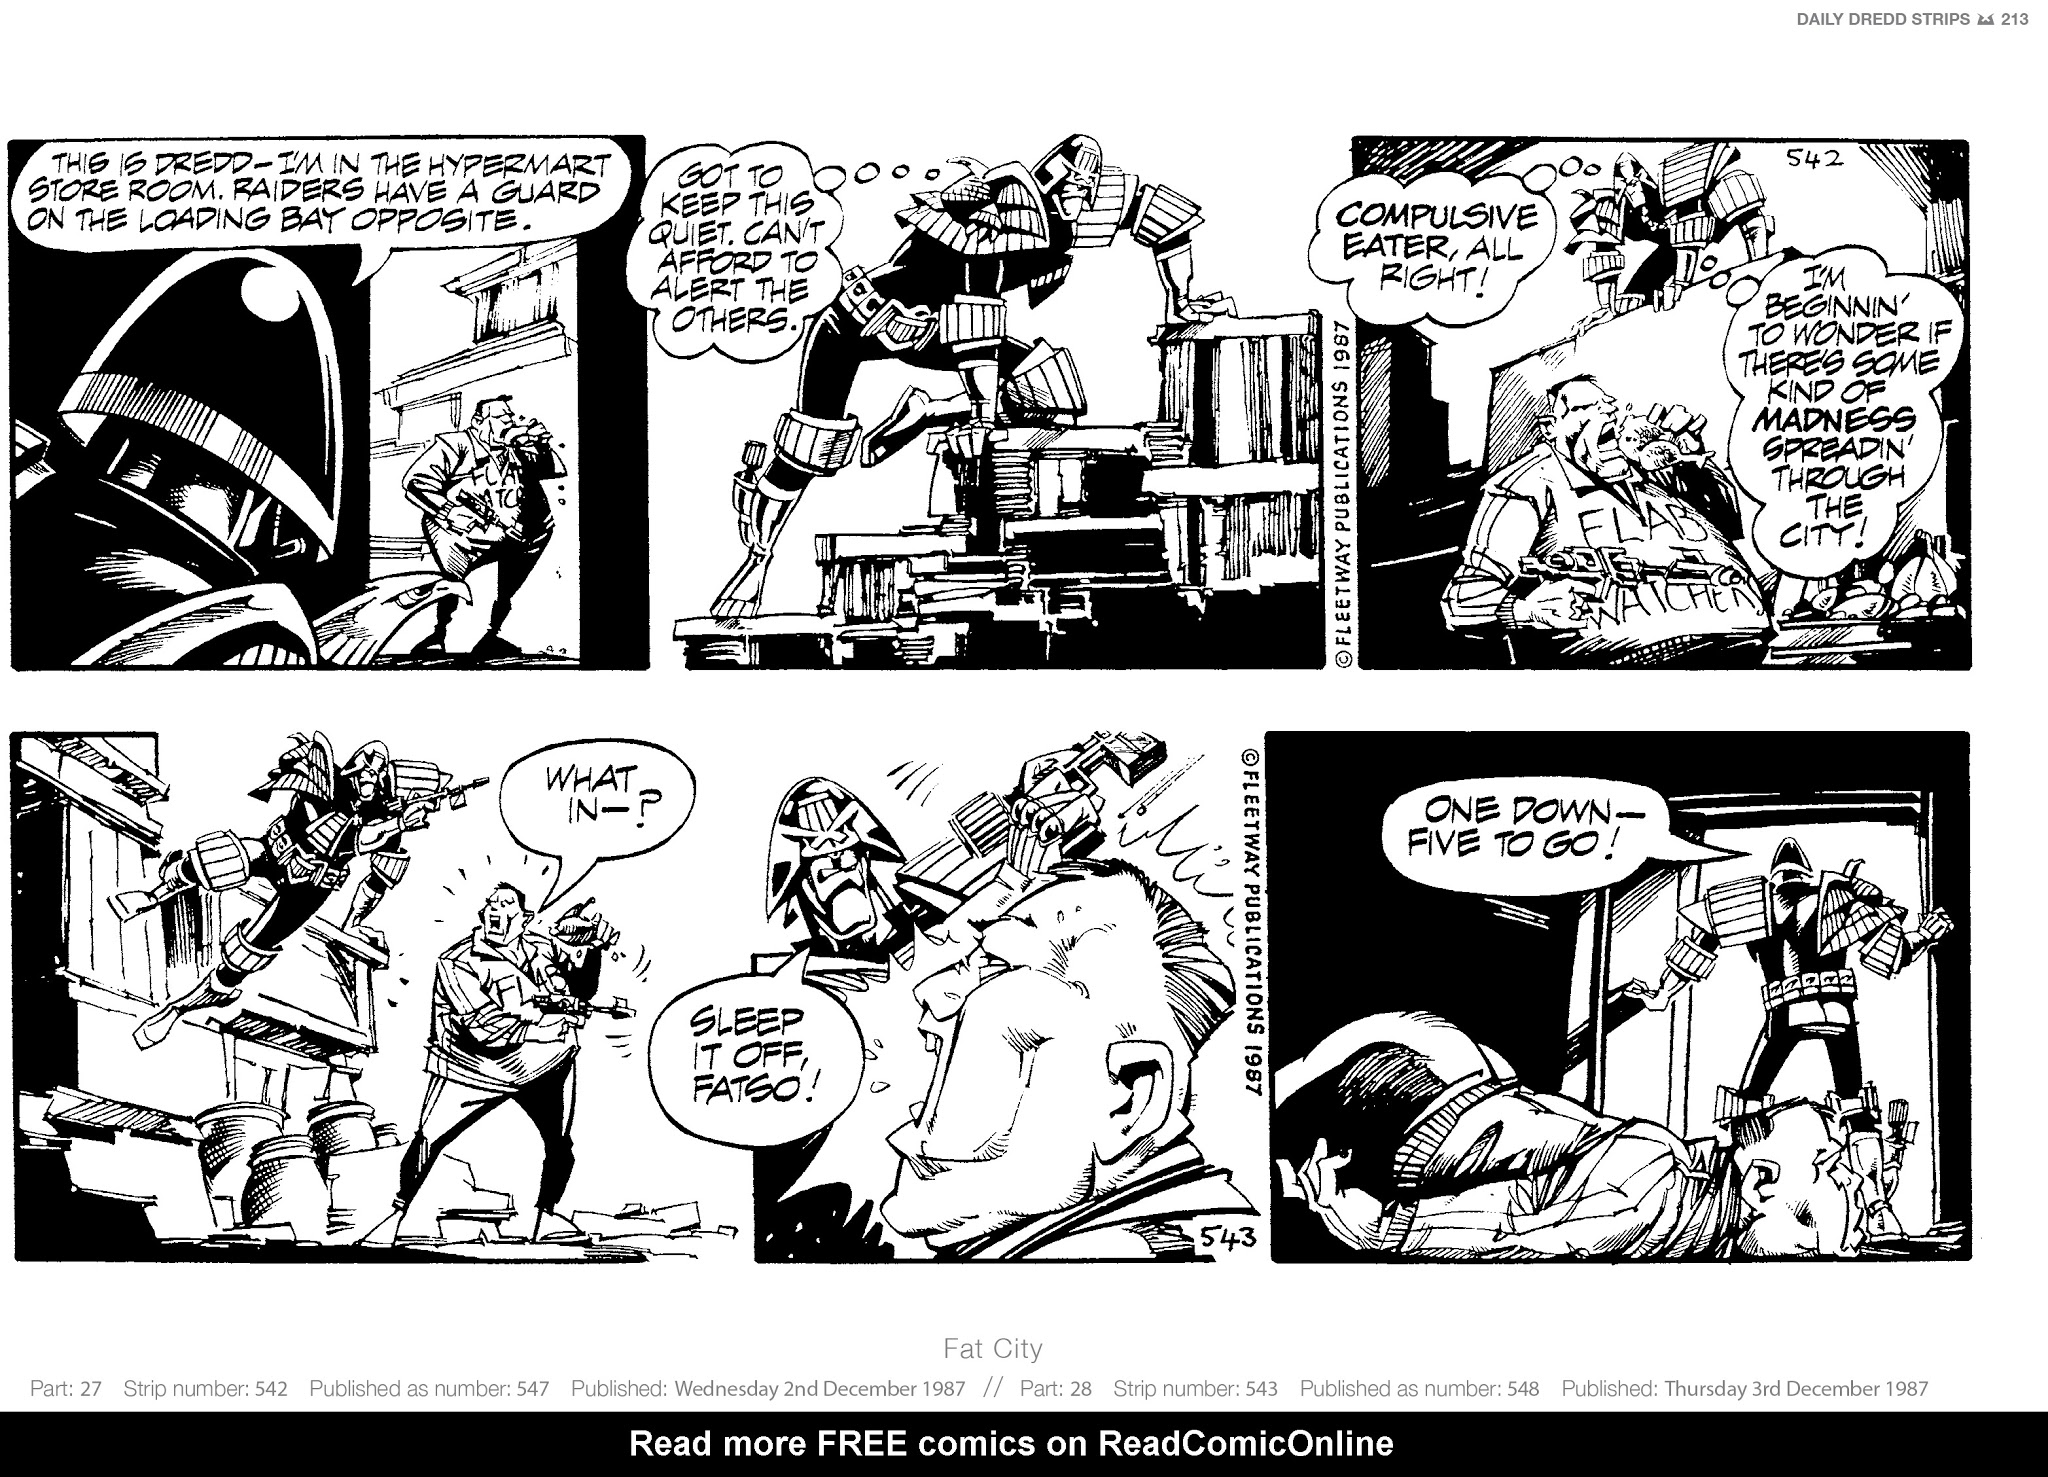 Read online Judge Dredd: The Daily Dredds comic -  Issue # TPB 2 - 216